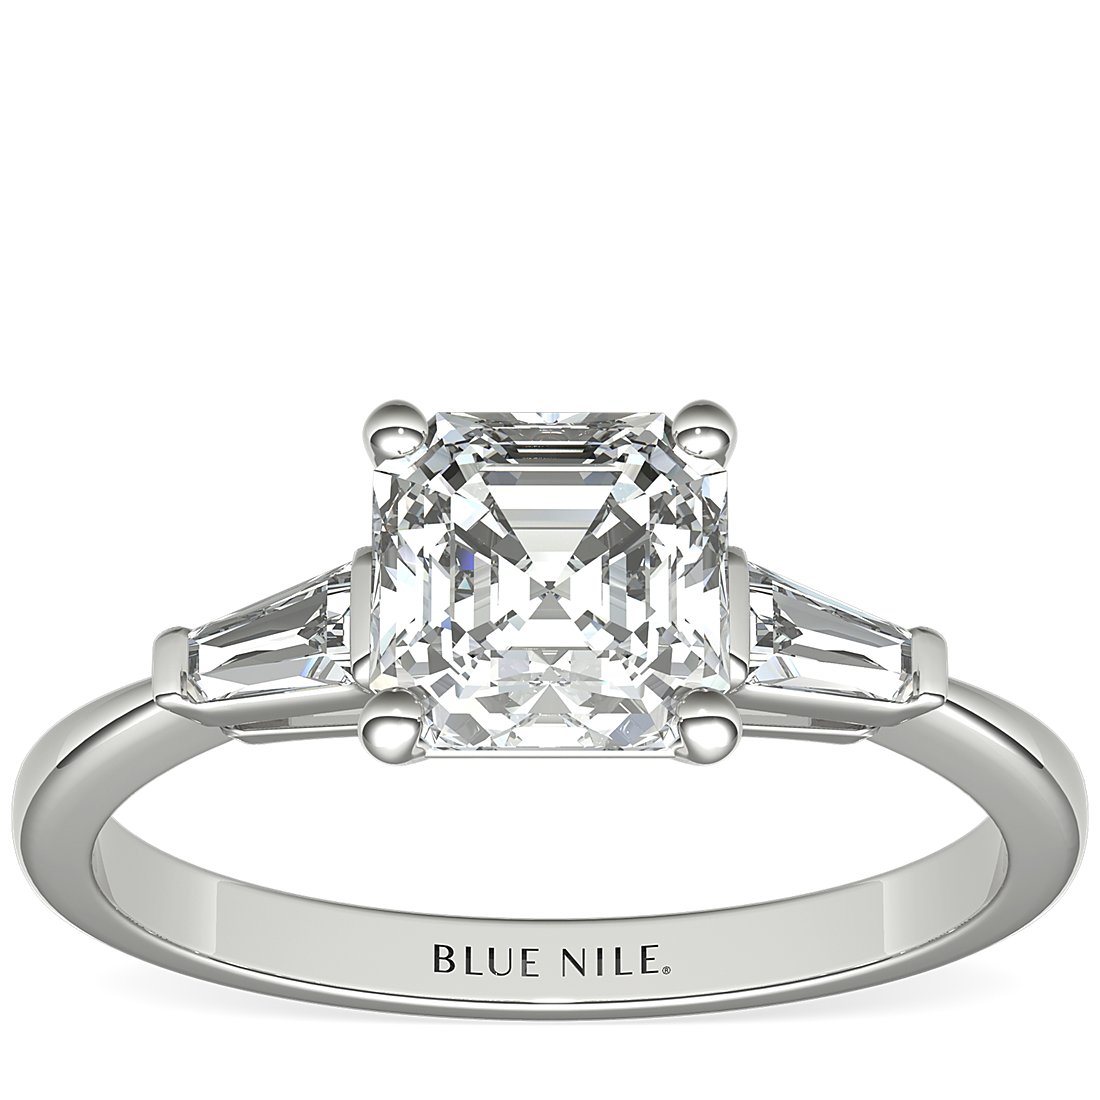 Three-stone diamond engagement ring